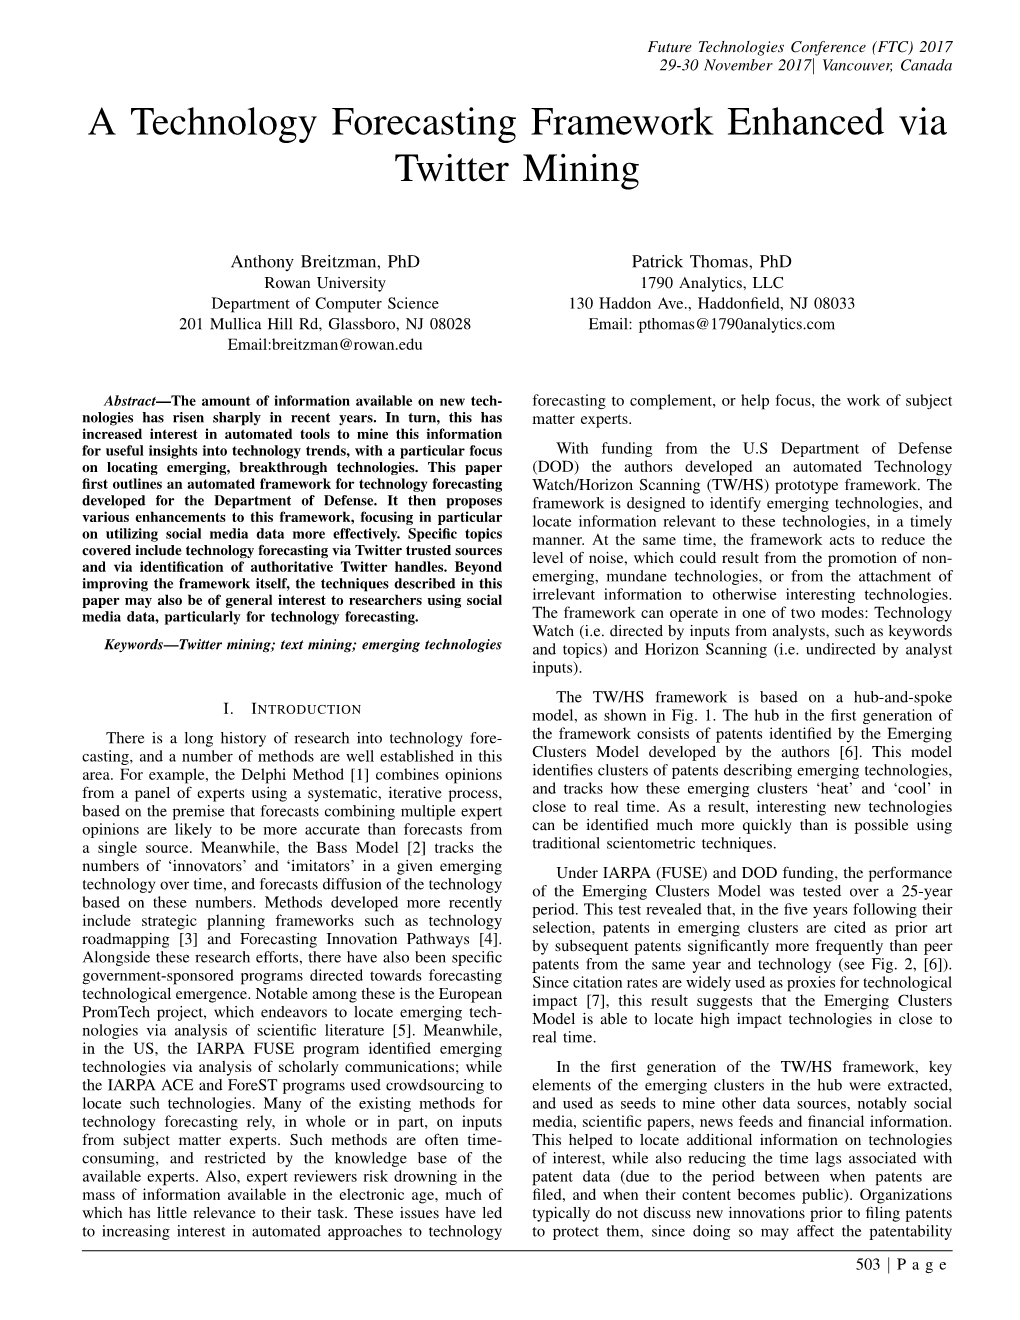 A Technology Forecasting Framework Enhanced Via Twitter Mining